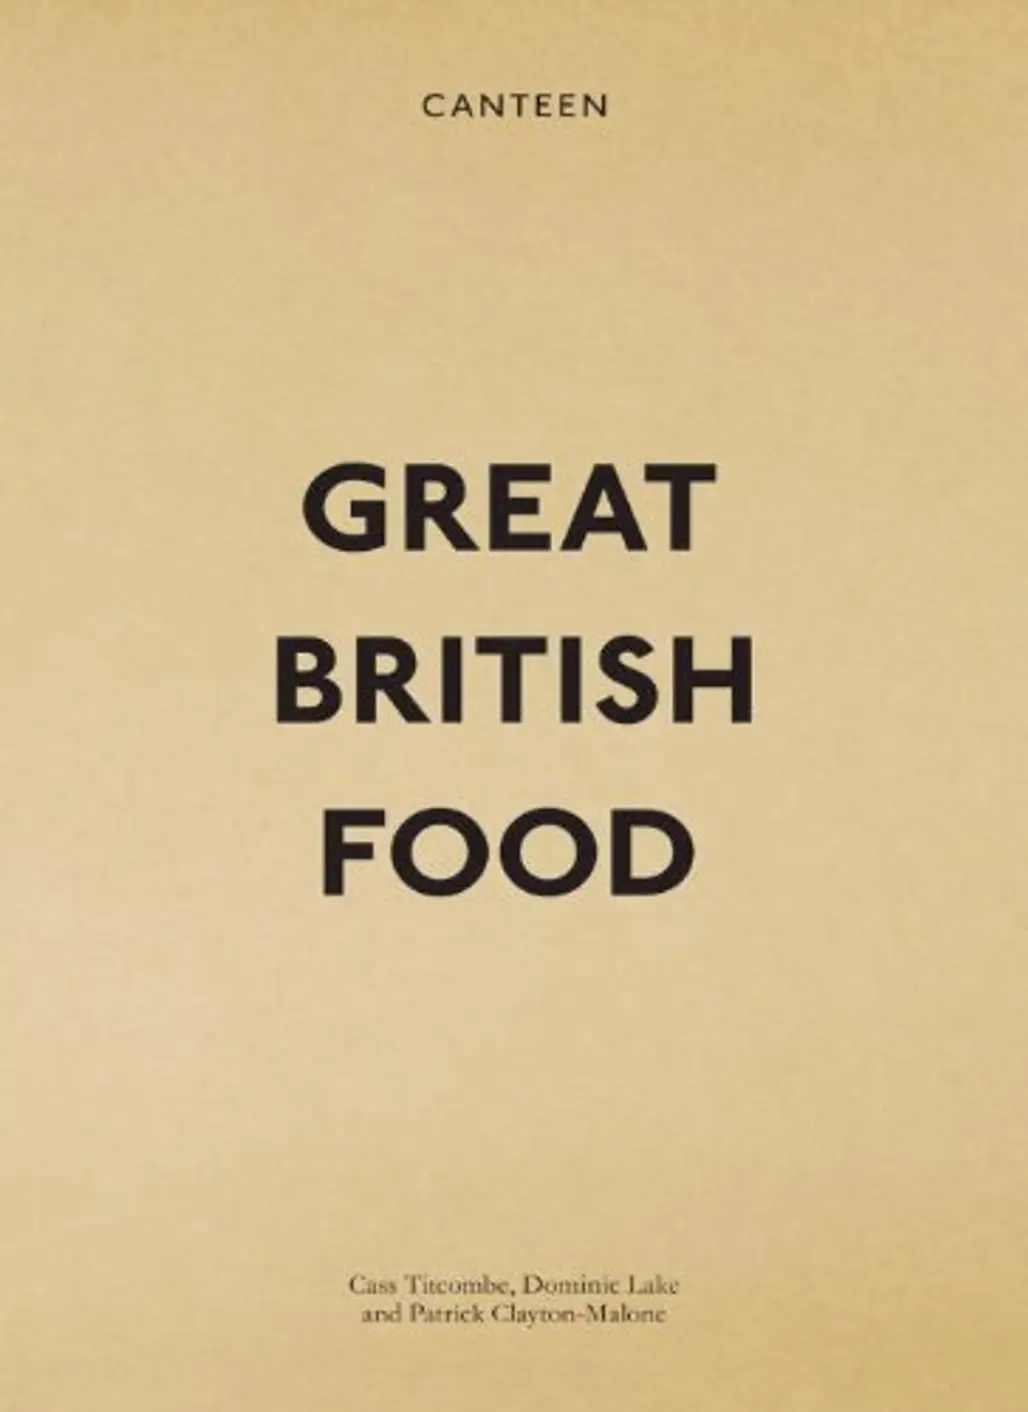 Canteen – Great British Food